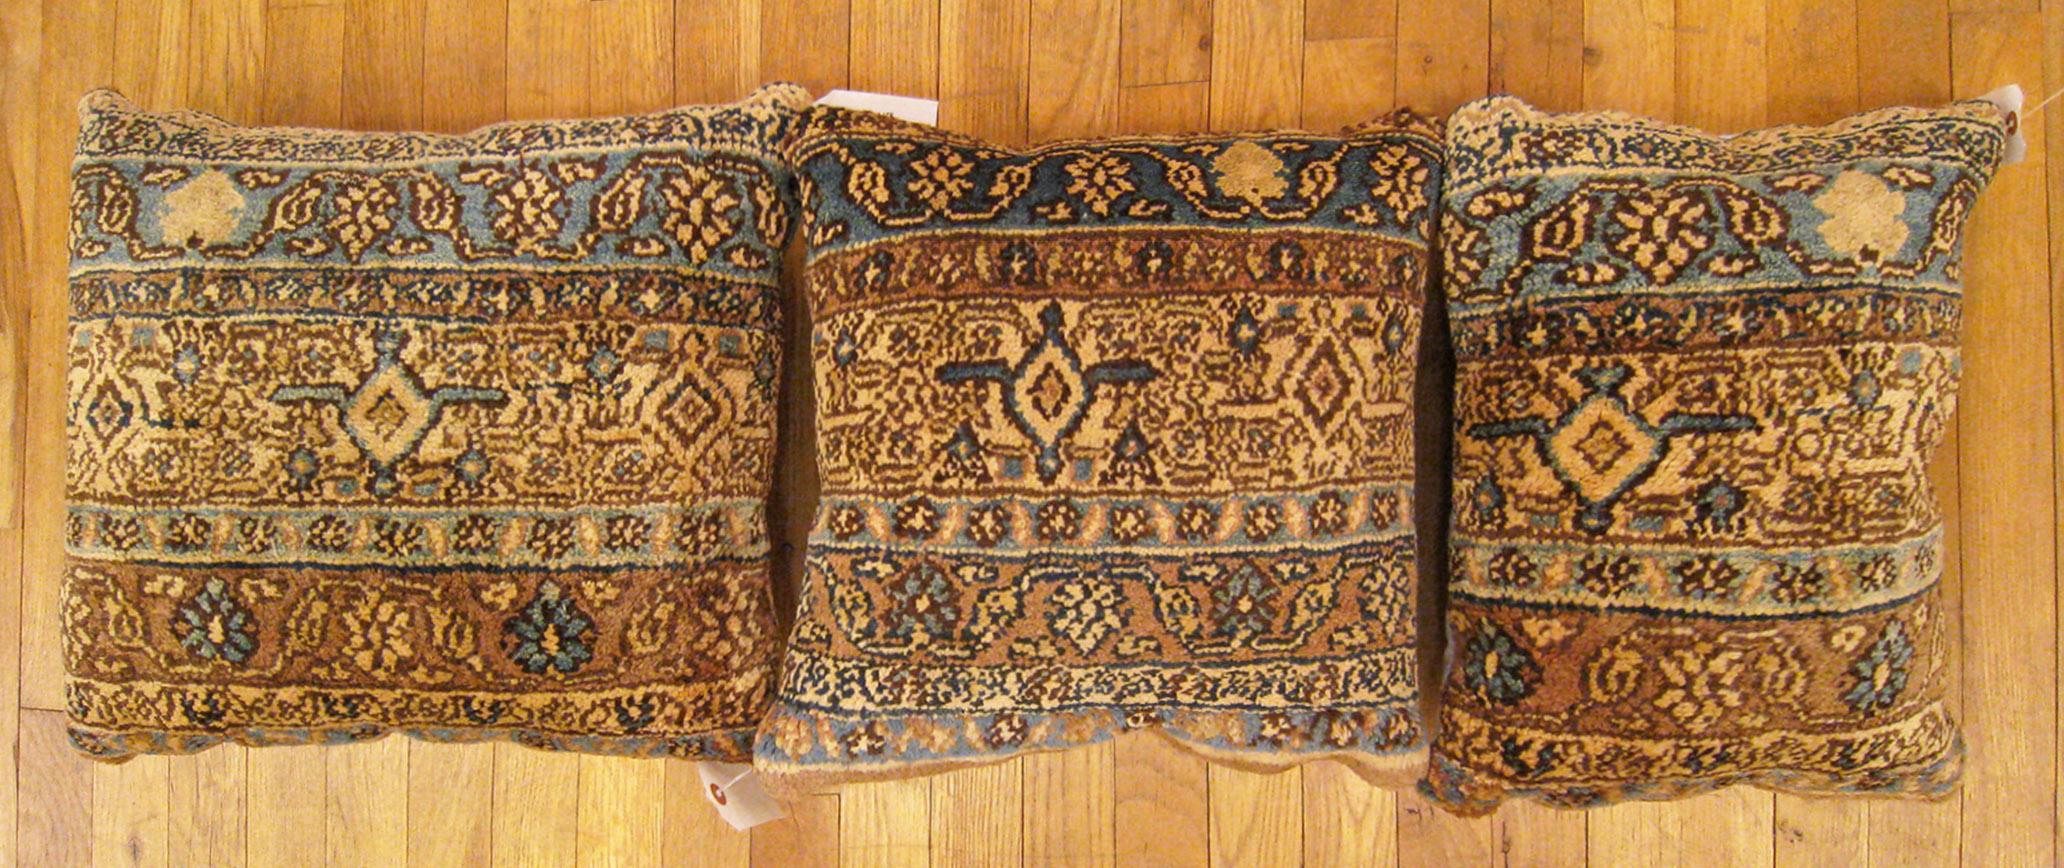 A set of vintage Persian pillows ; size 1'6” x 1'9